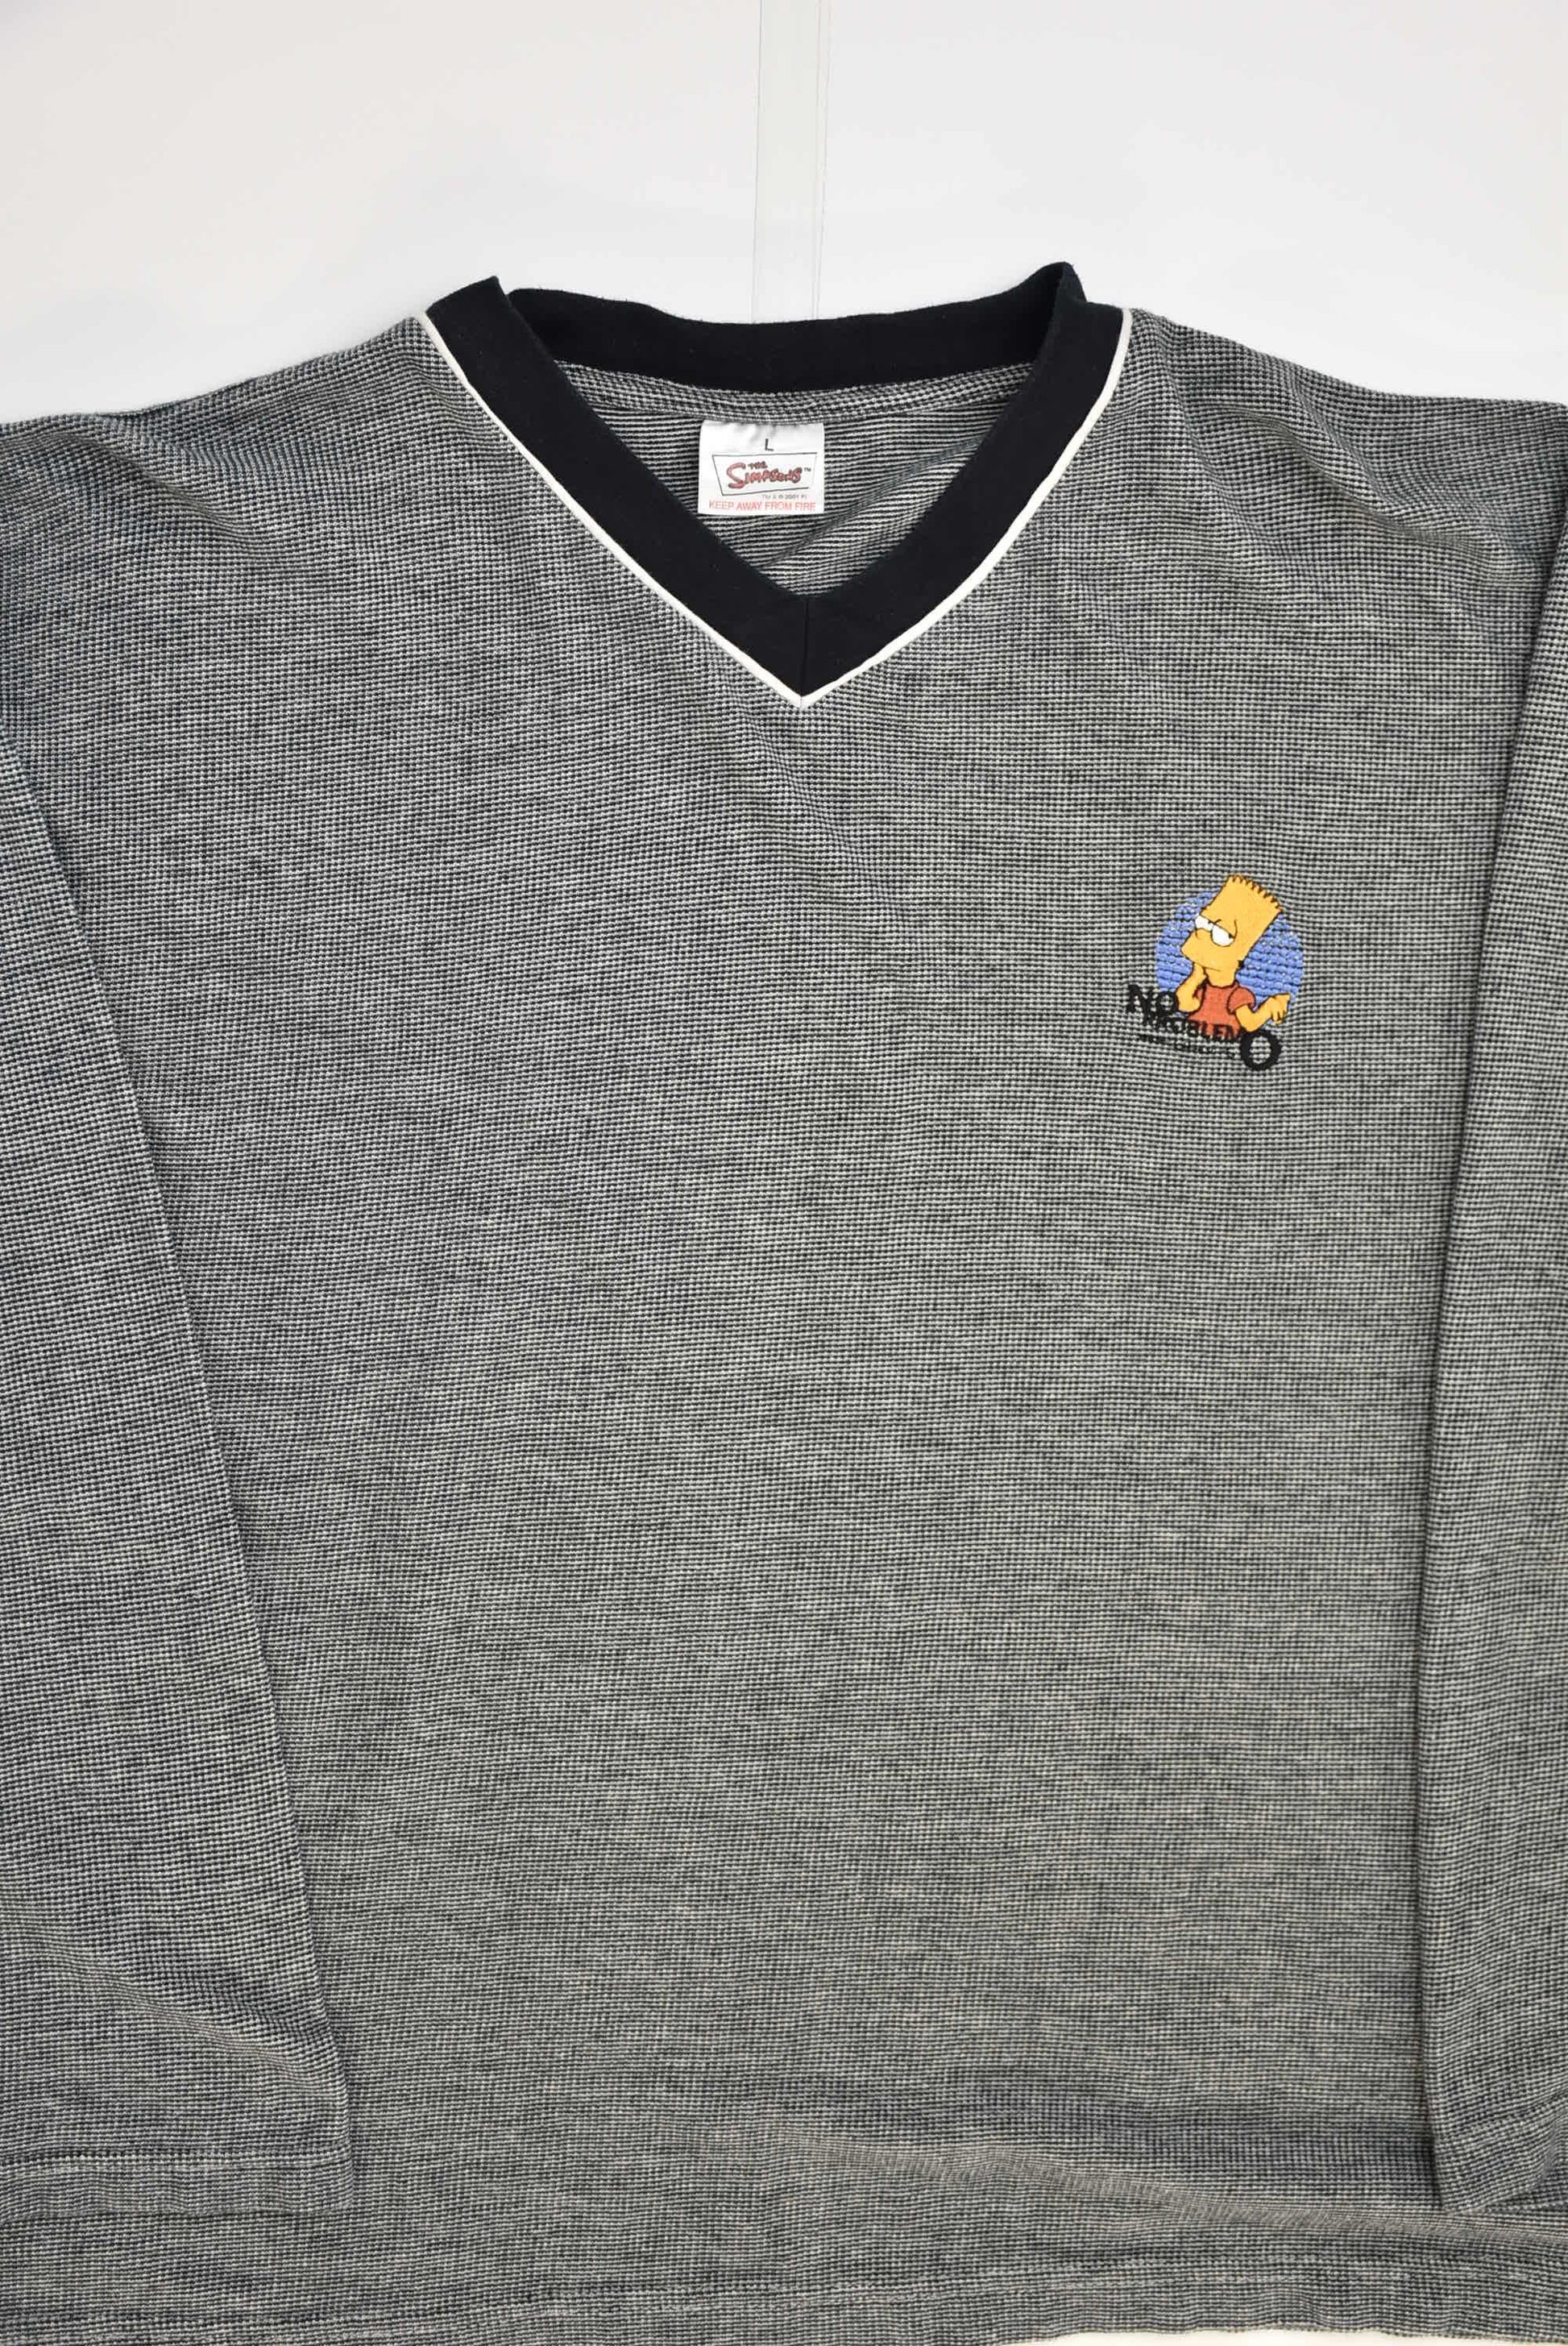 Simpsons 'No Problemo' Sweatshirt - Slayyy Vintage